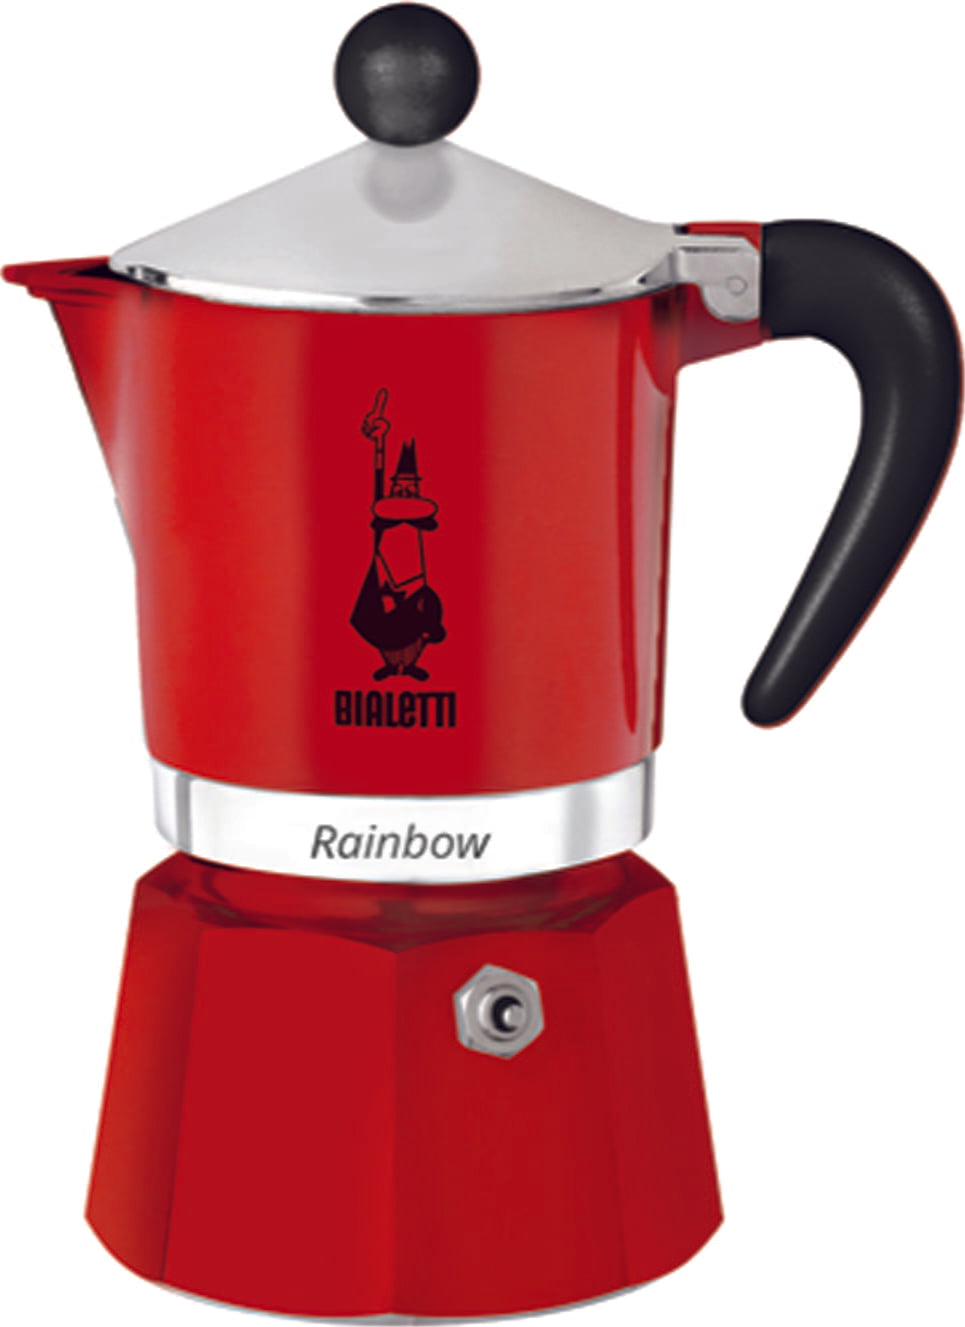 Bialetti Rainbow 6 Cup Red Espresso Maker